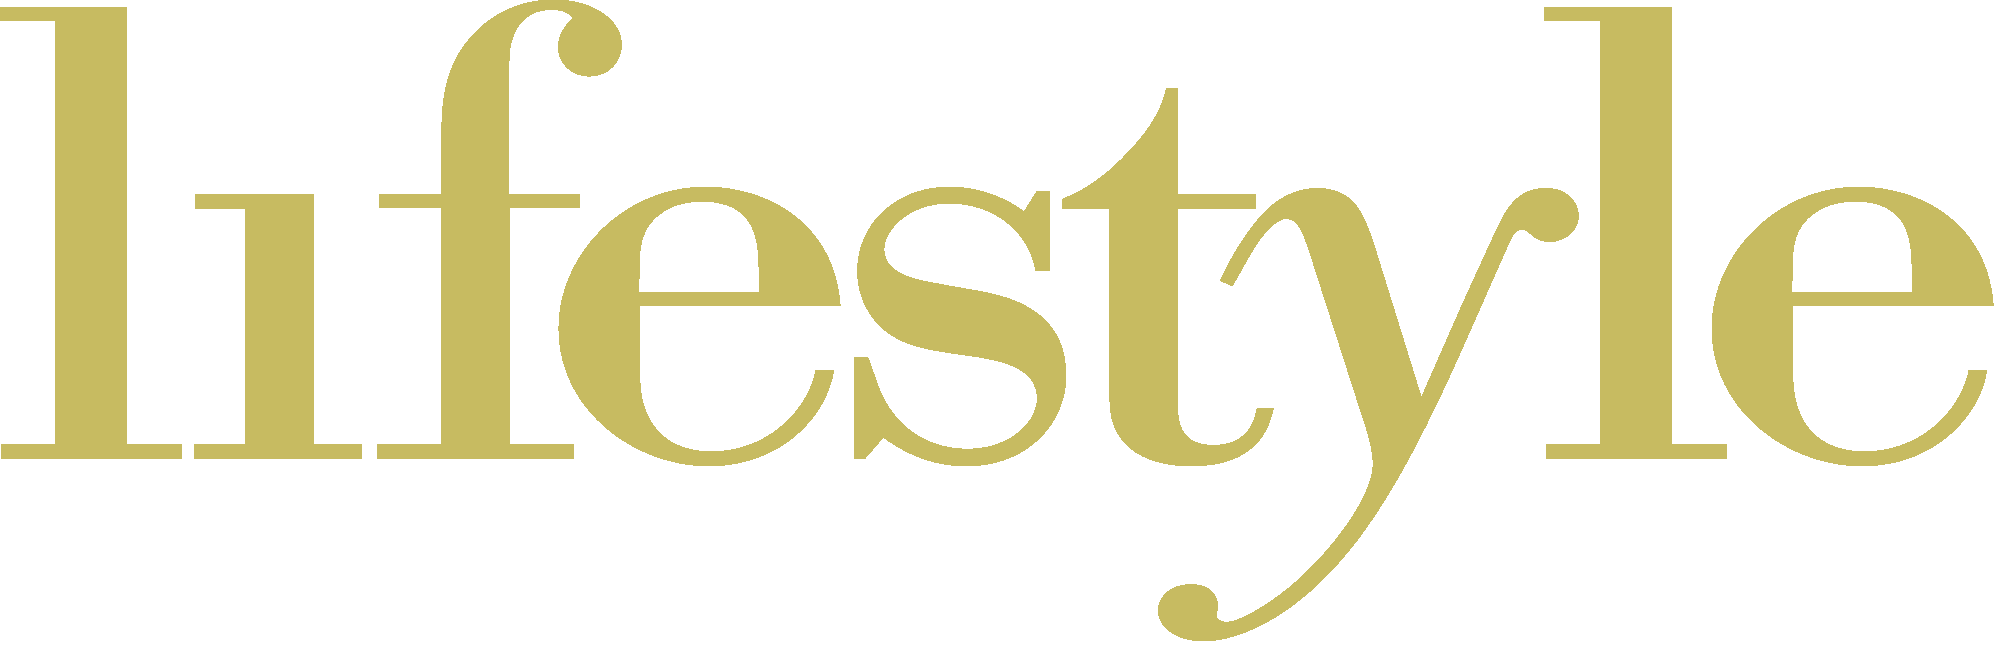 Lifestyle Property Agency - East Sydney